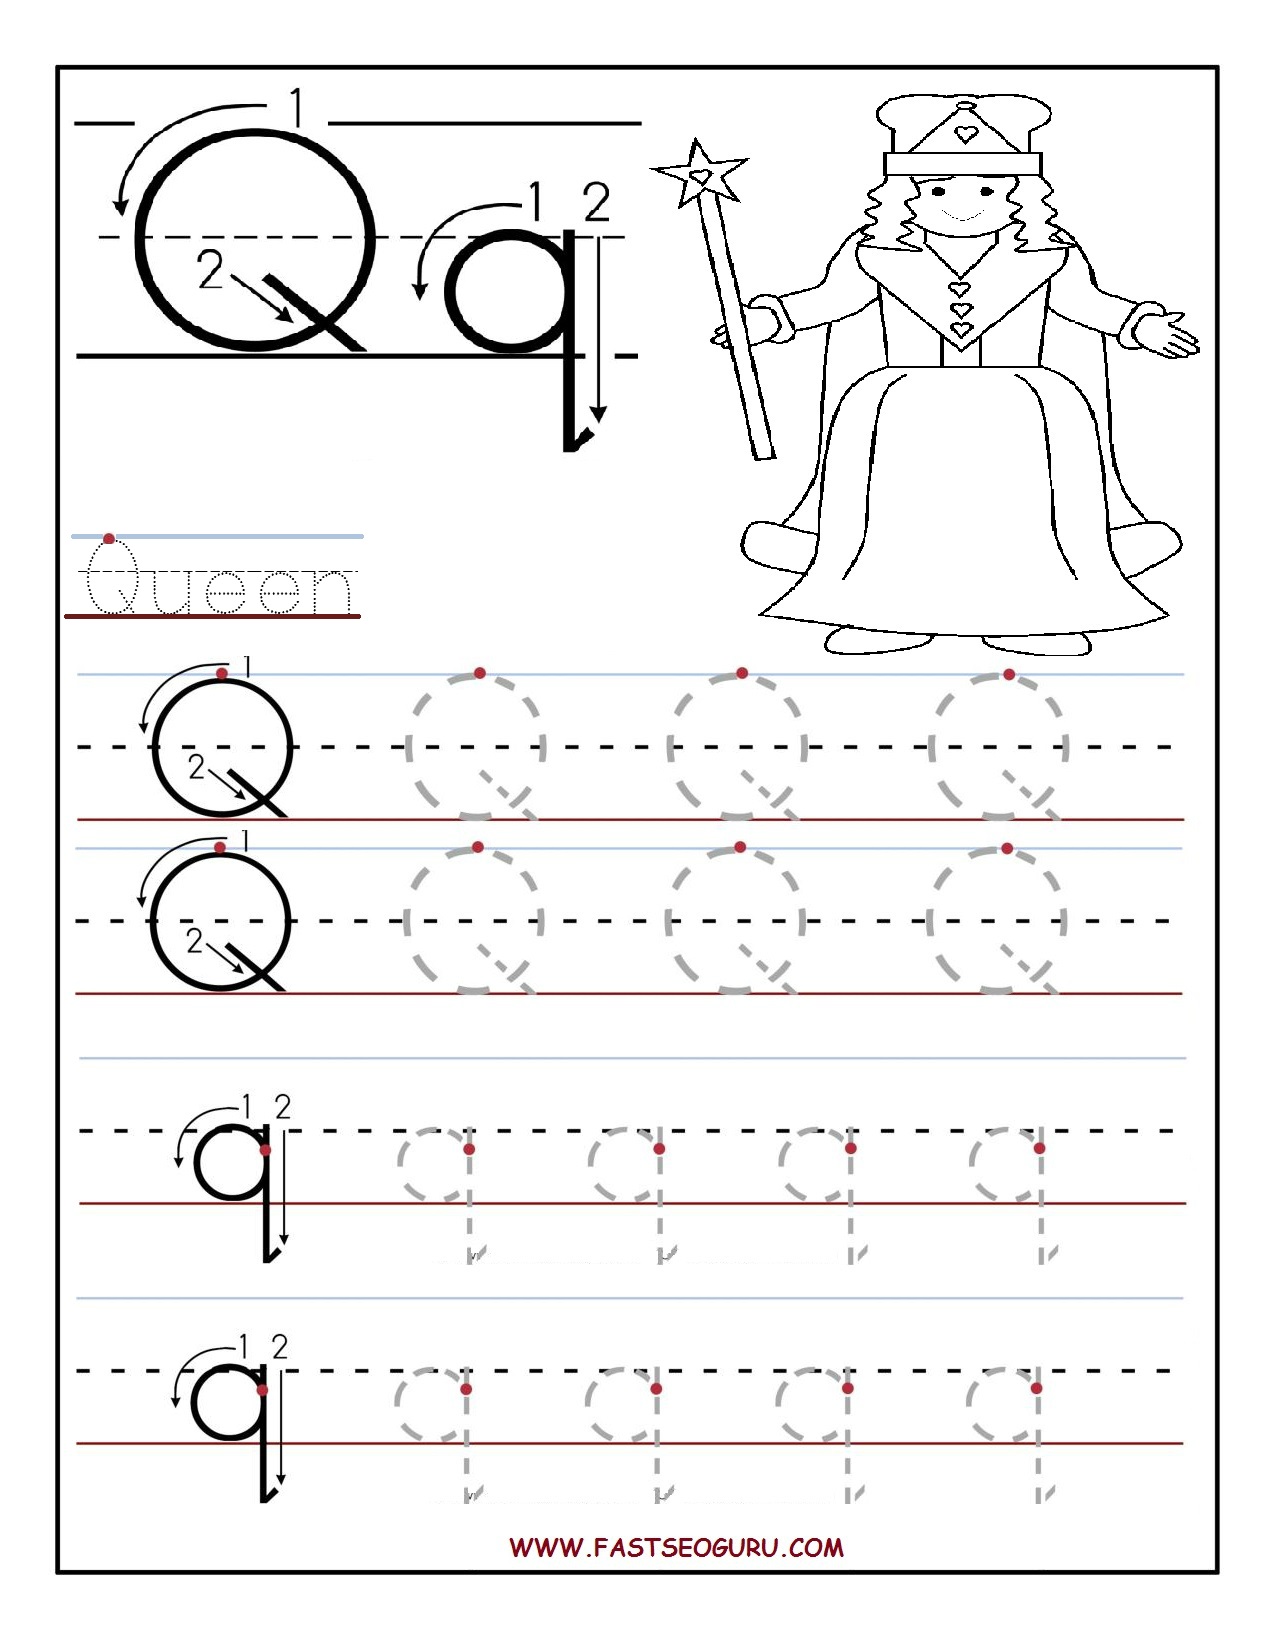 Printable letter Q tracing worksheets for preschool.jpg